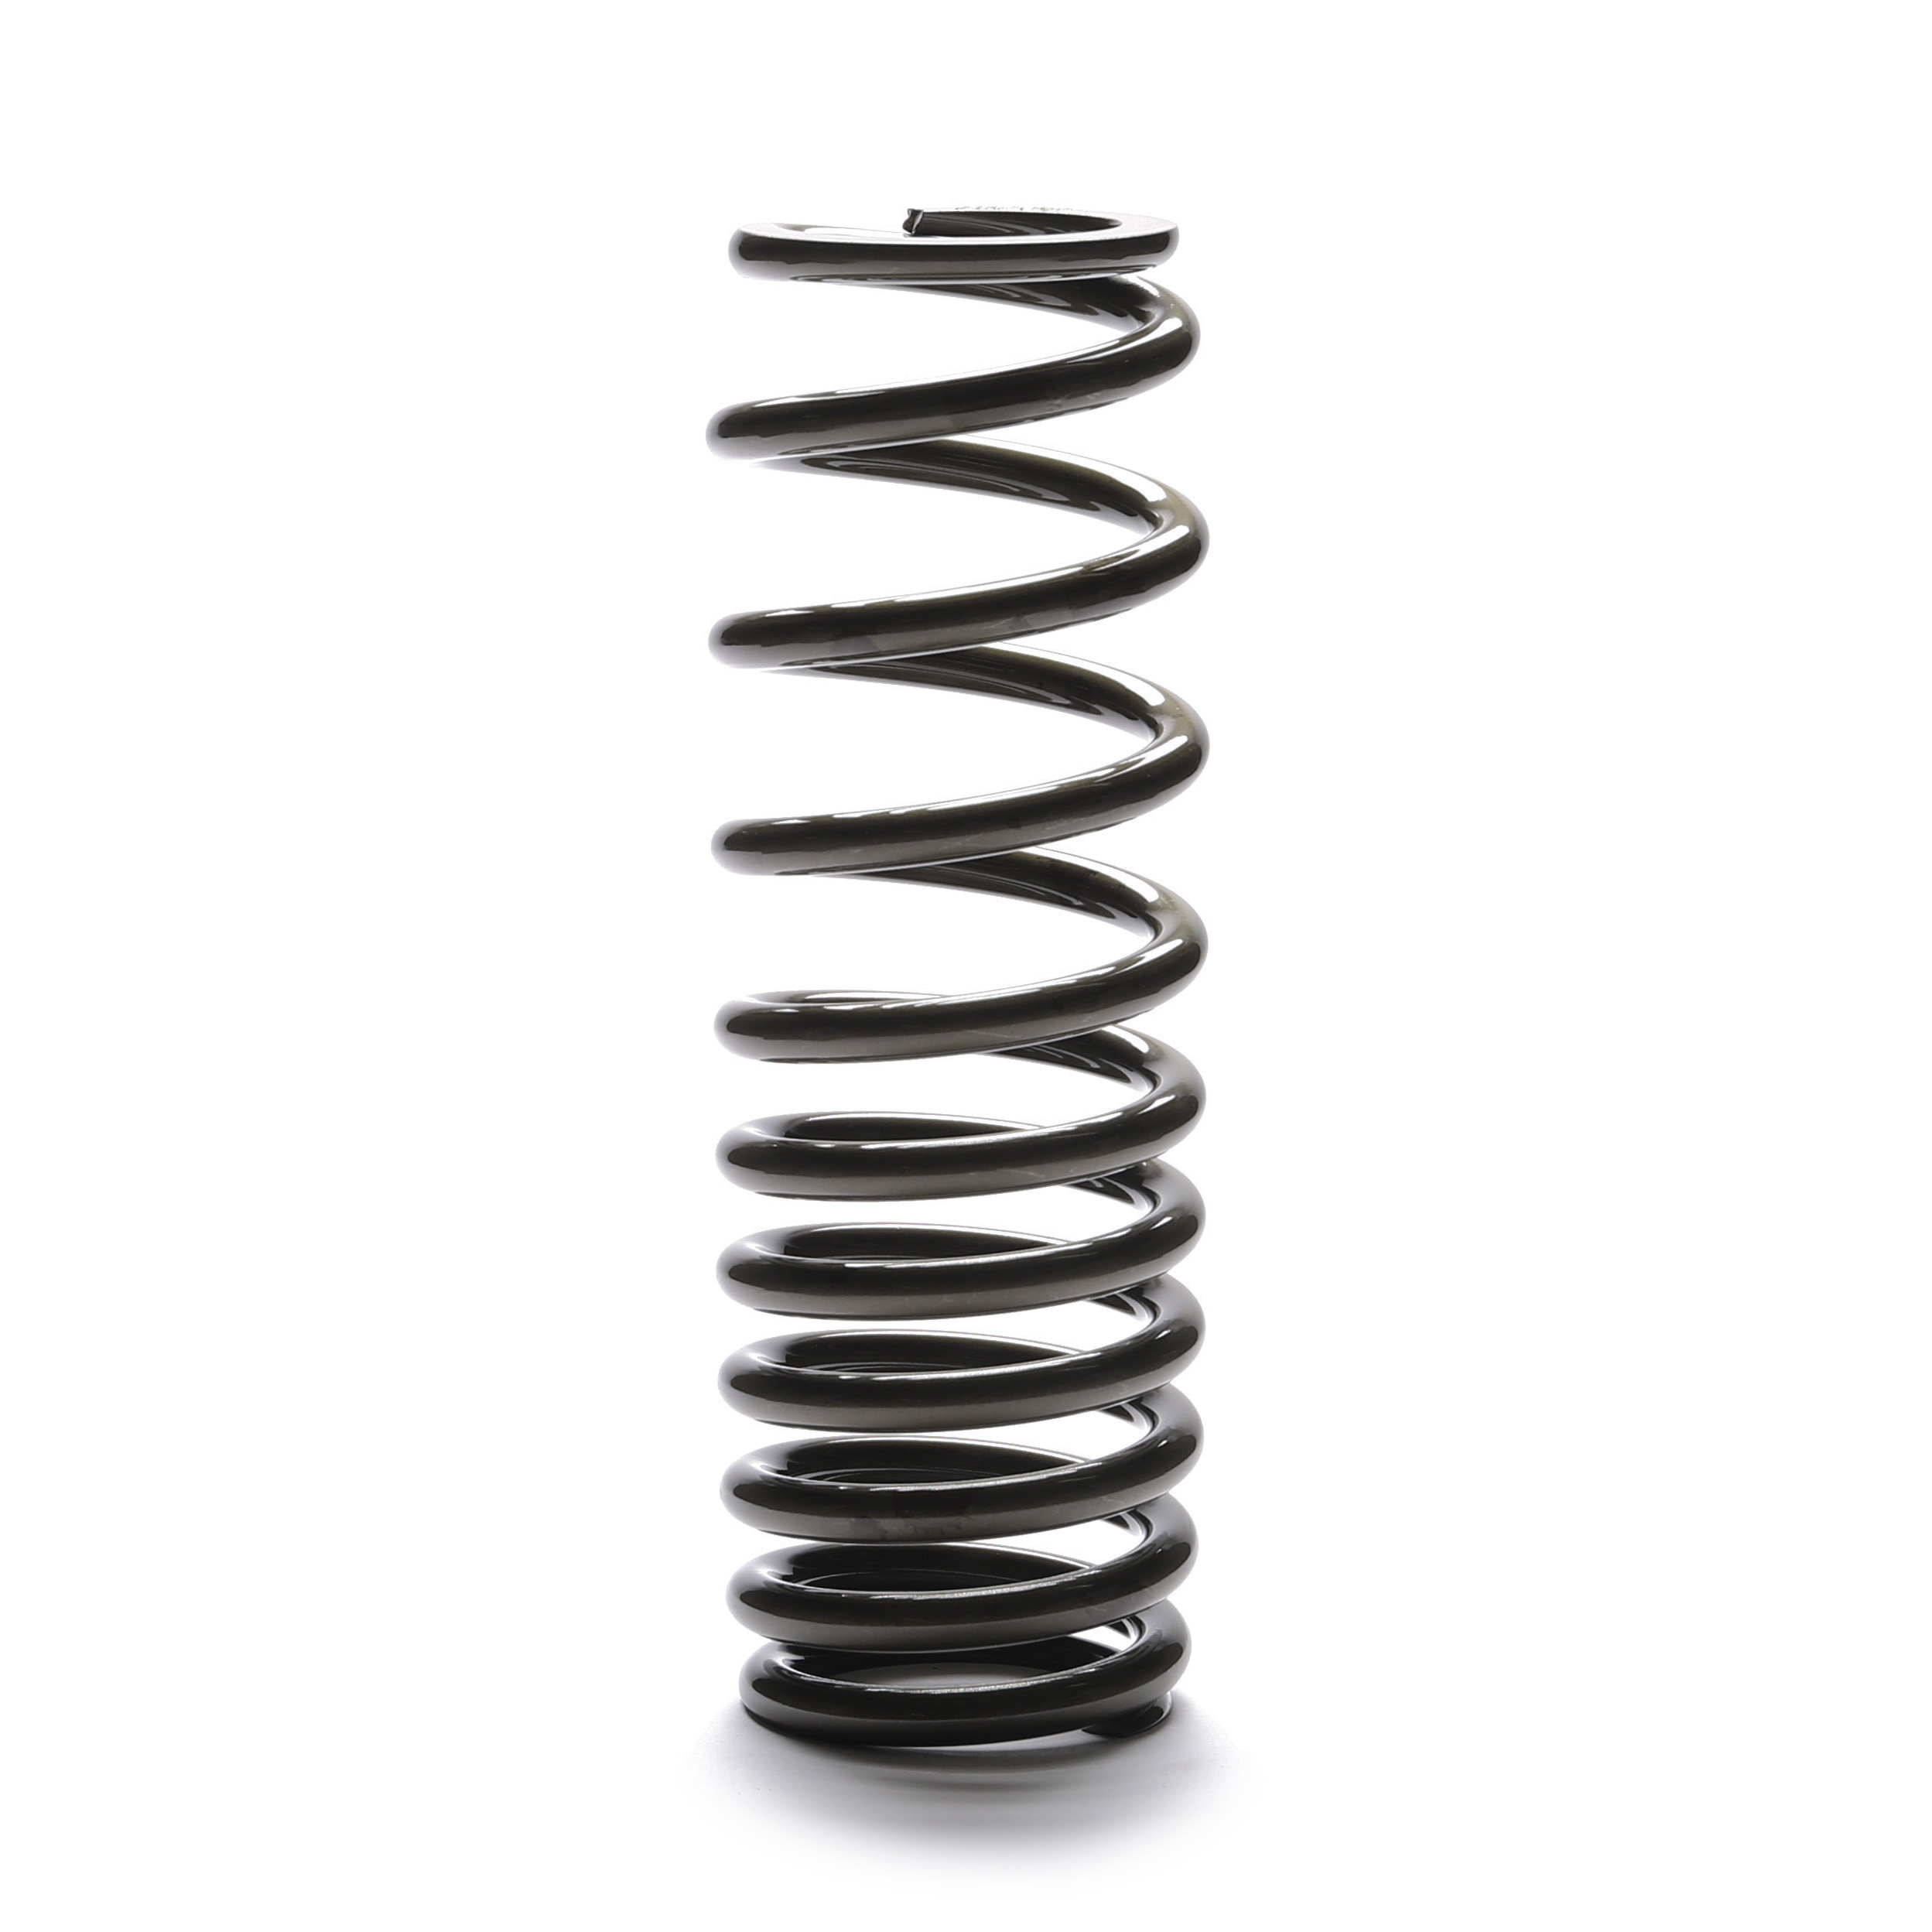 Black colored progressive coil over spring standing on end